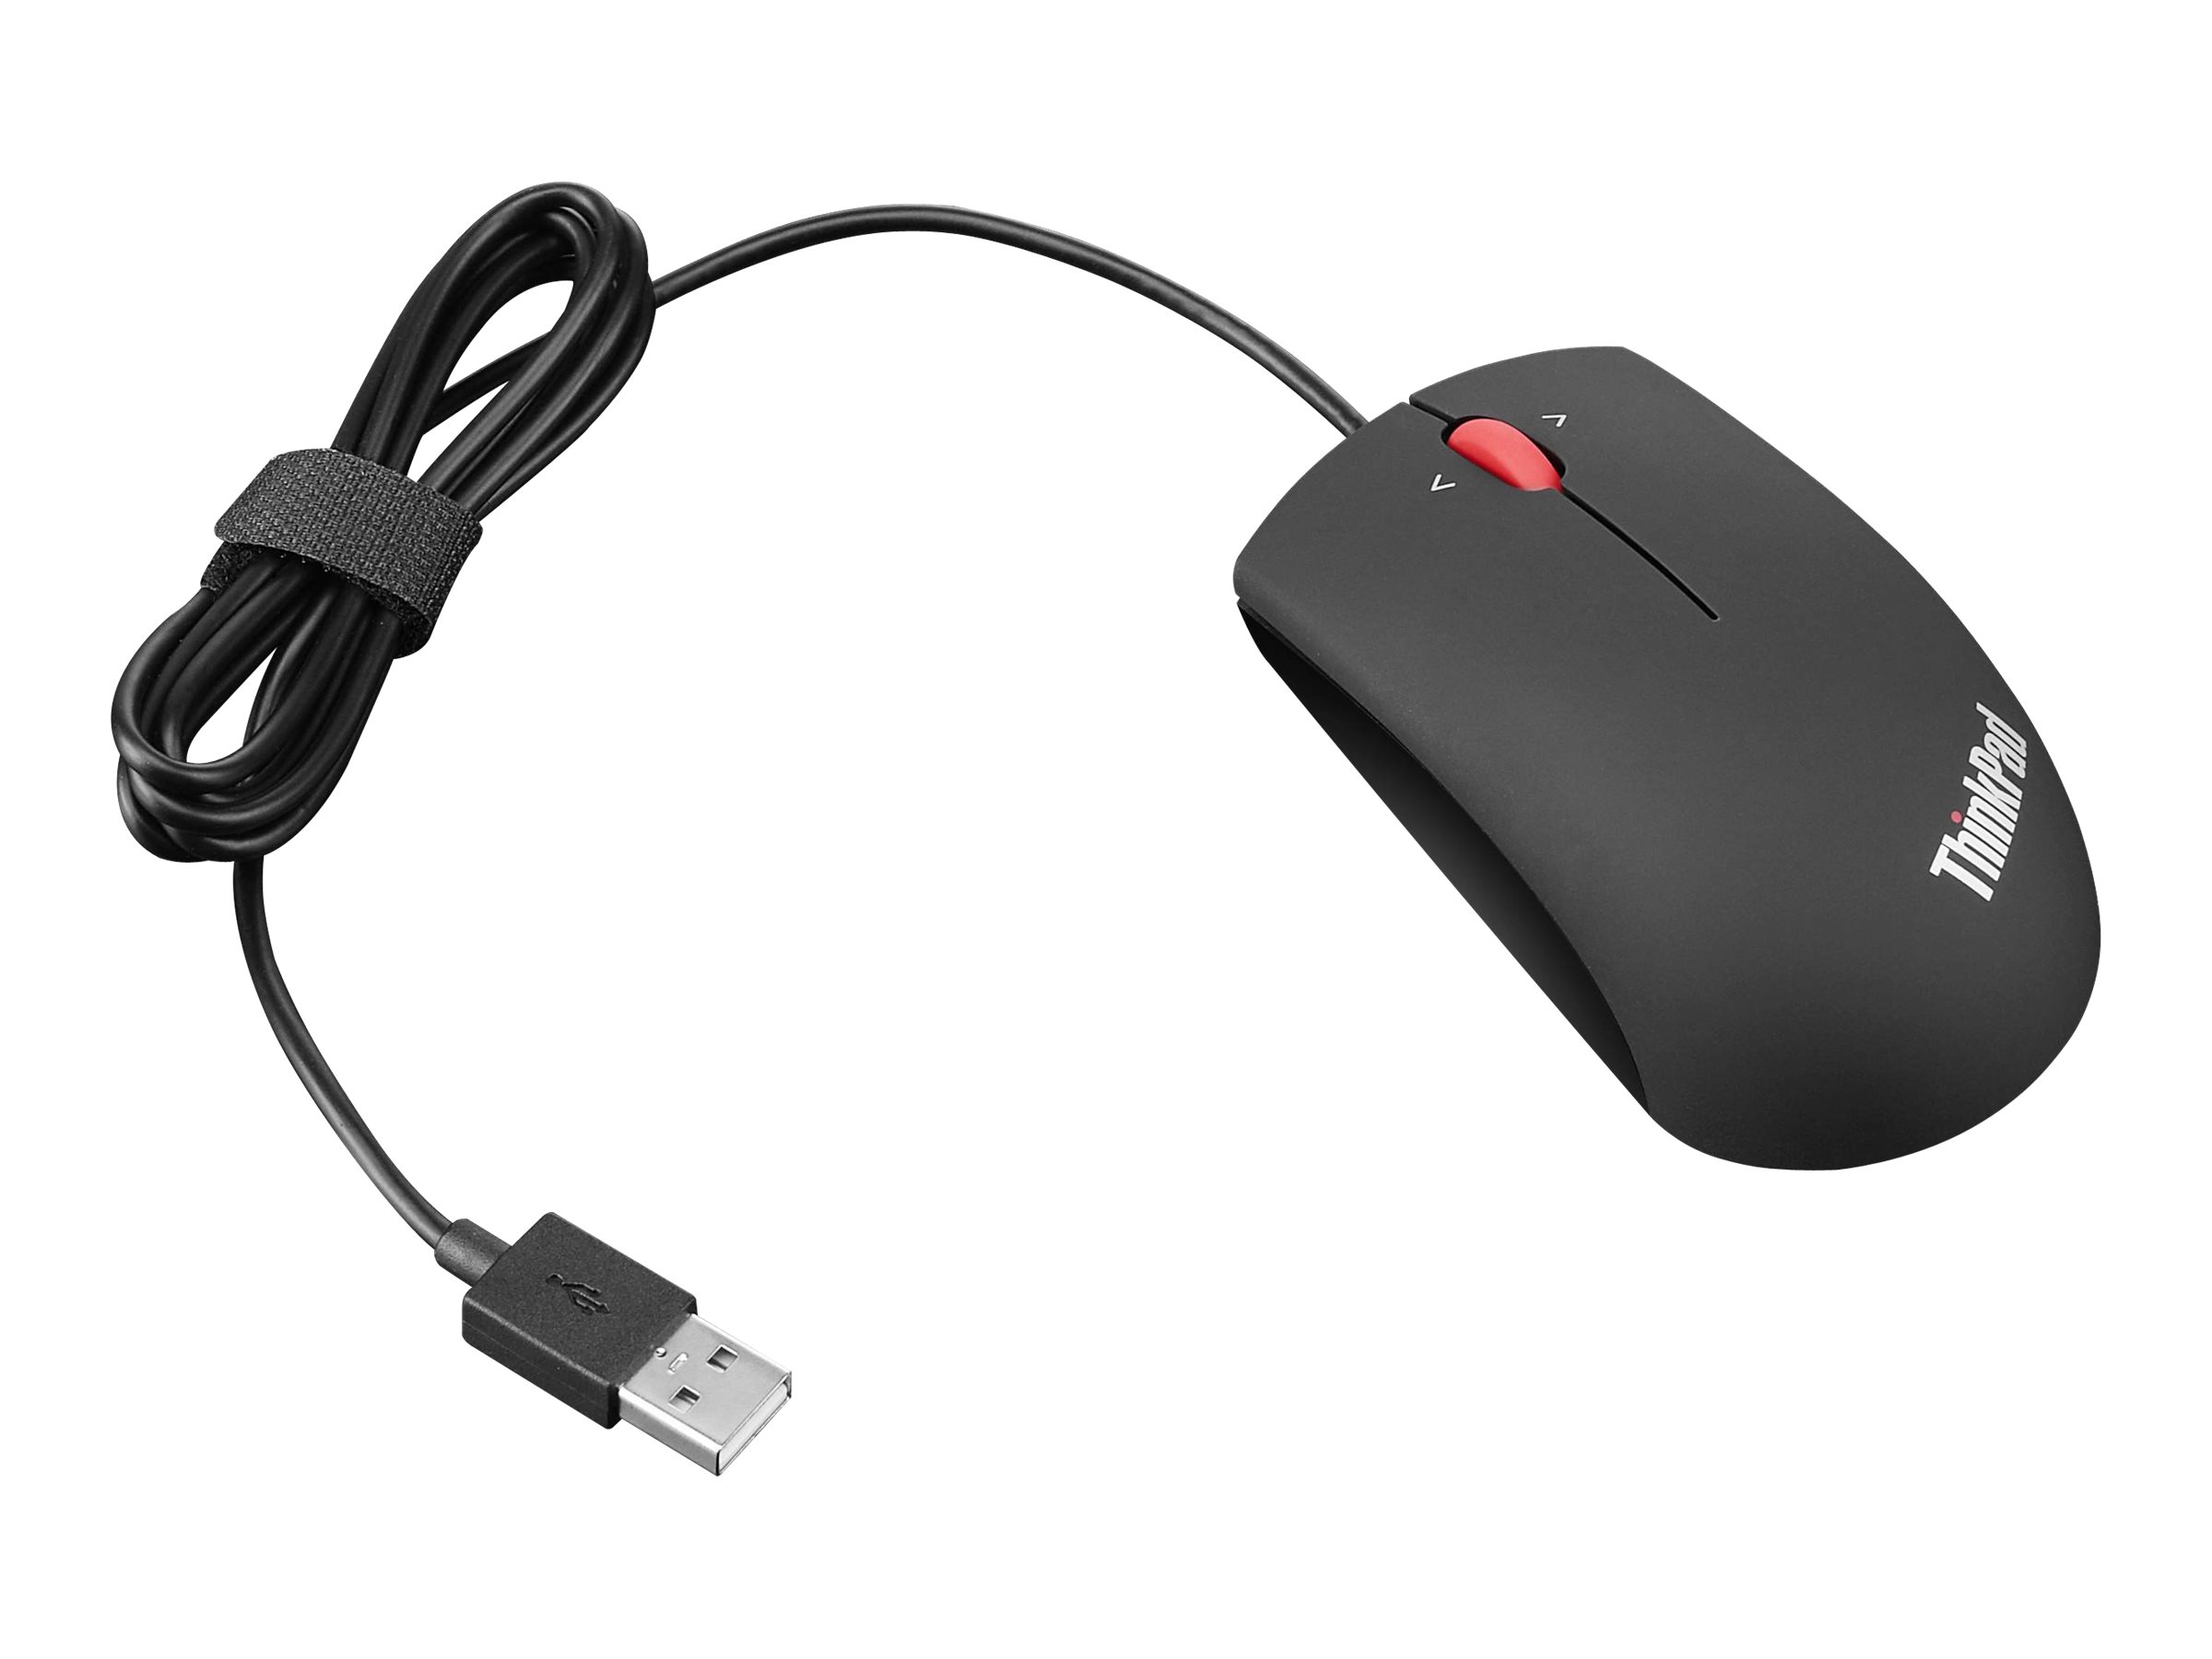 Lenovo ThinkPad Precision USB Mouse